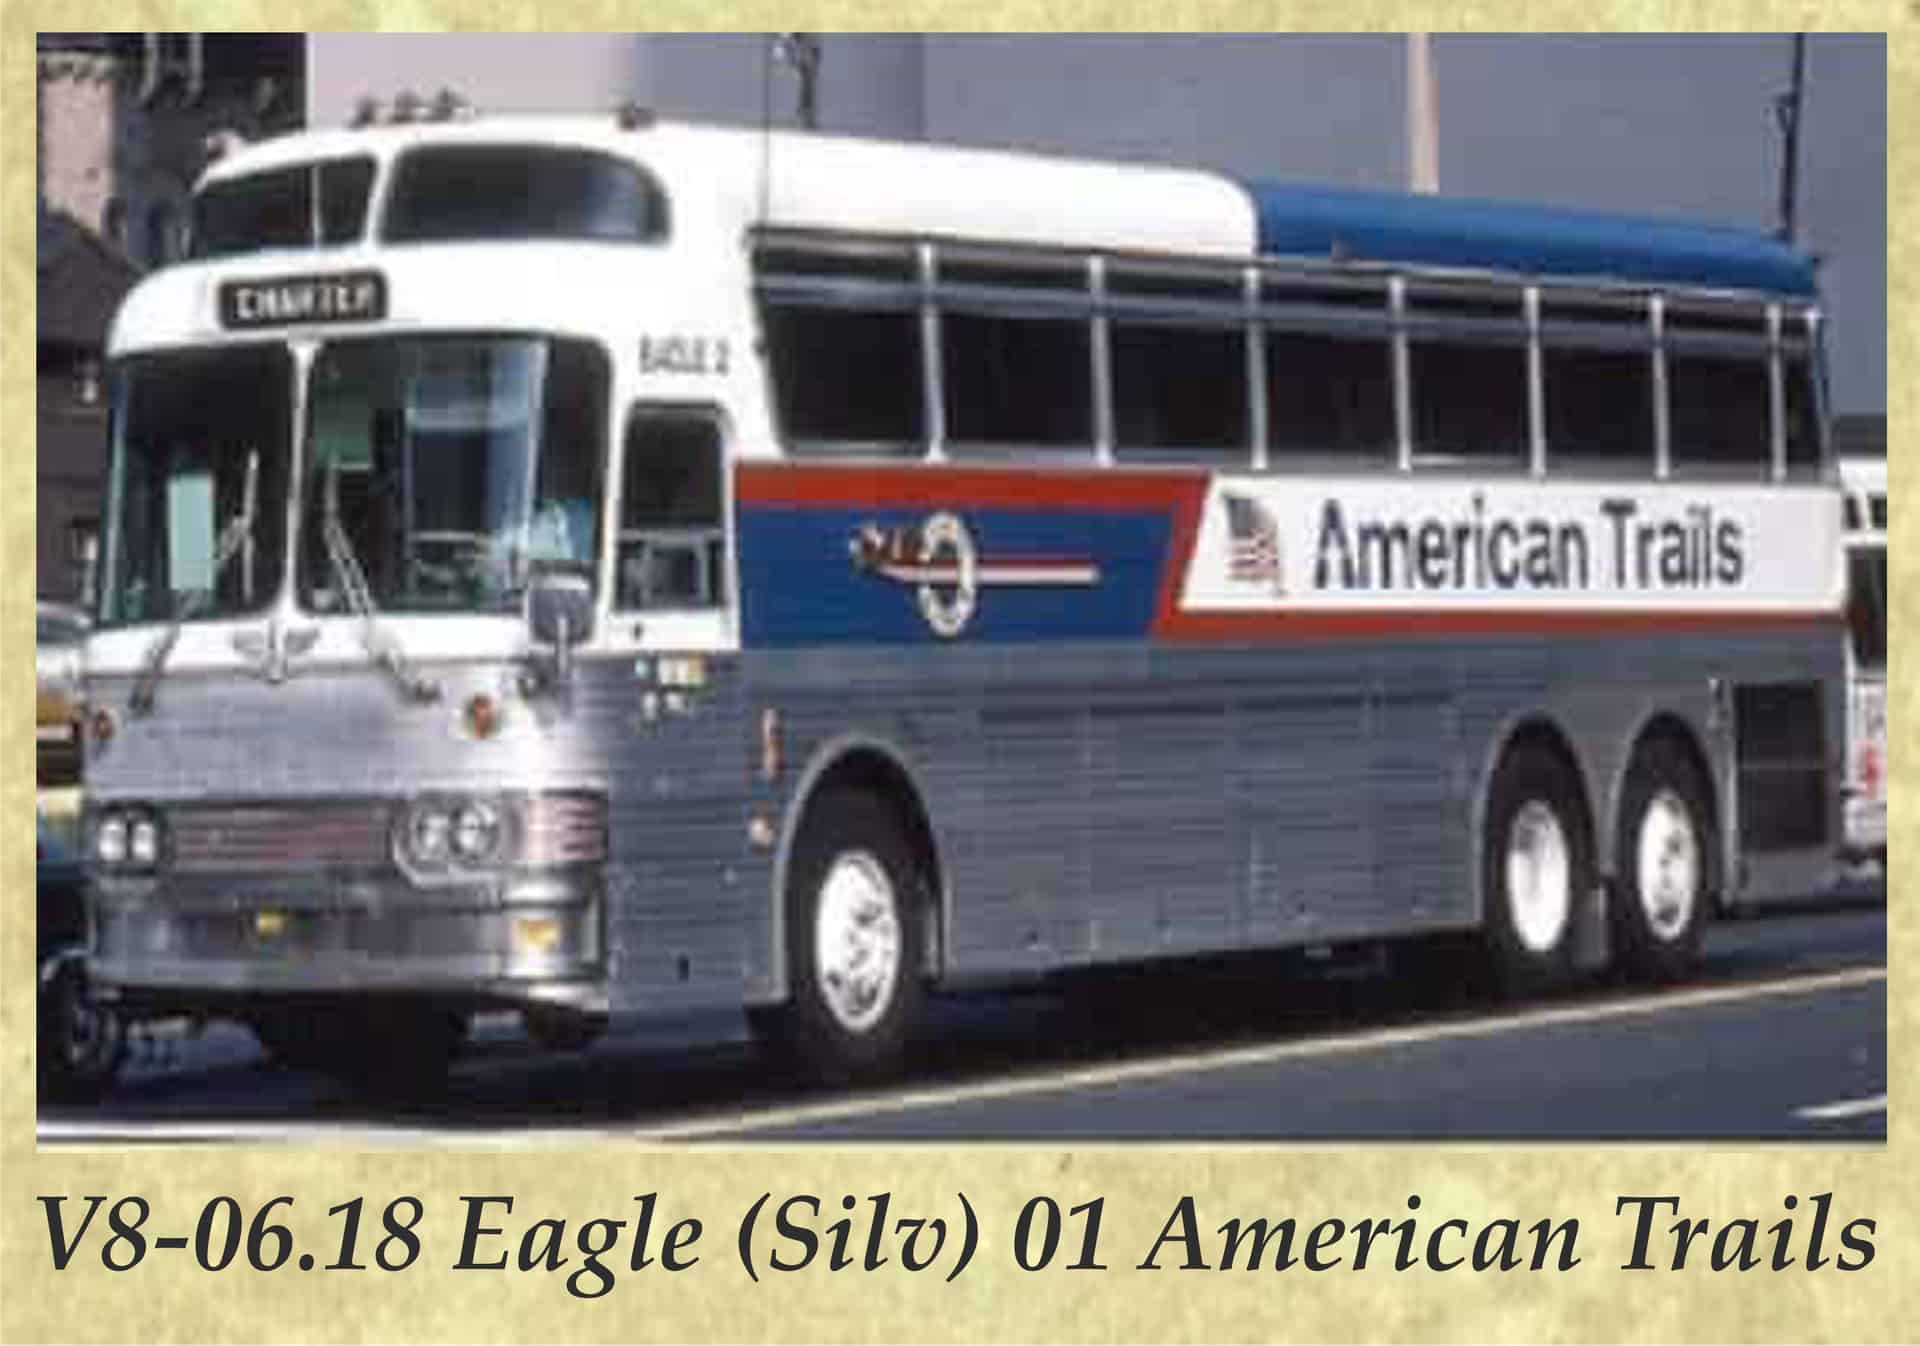 V8-06.18 Eagle (Silv) 01 American Trails